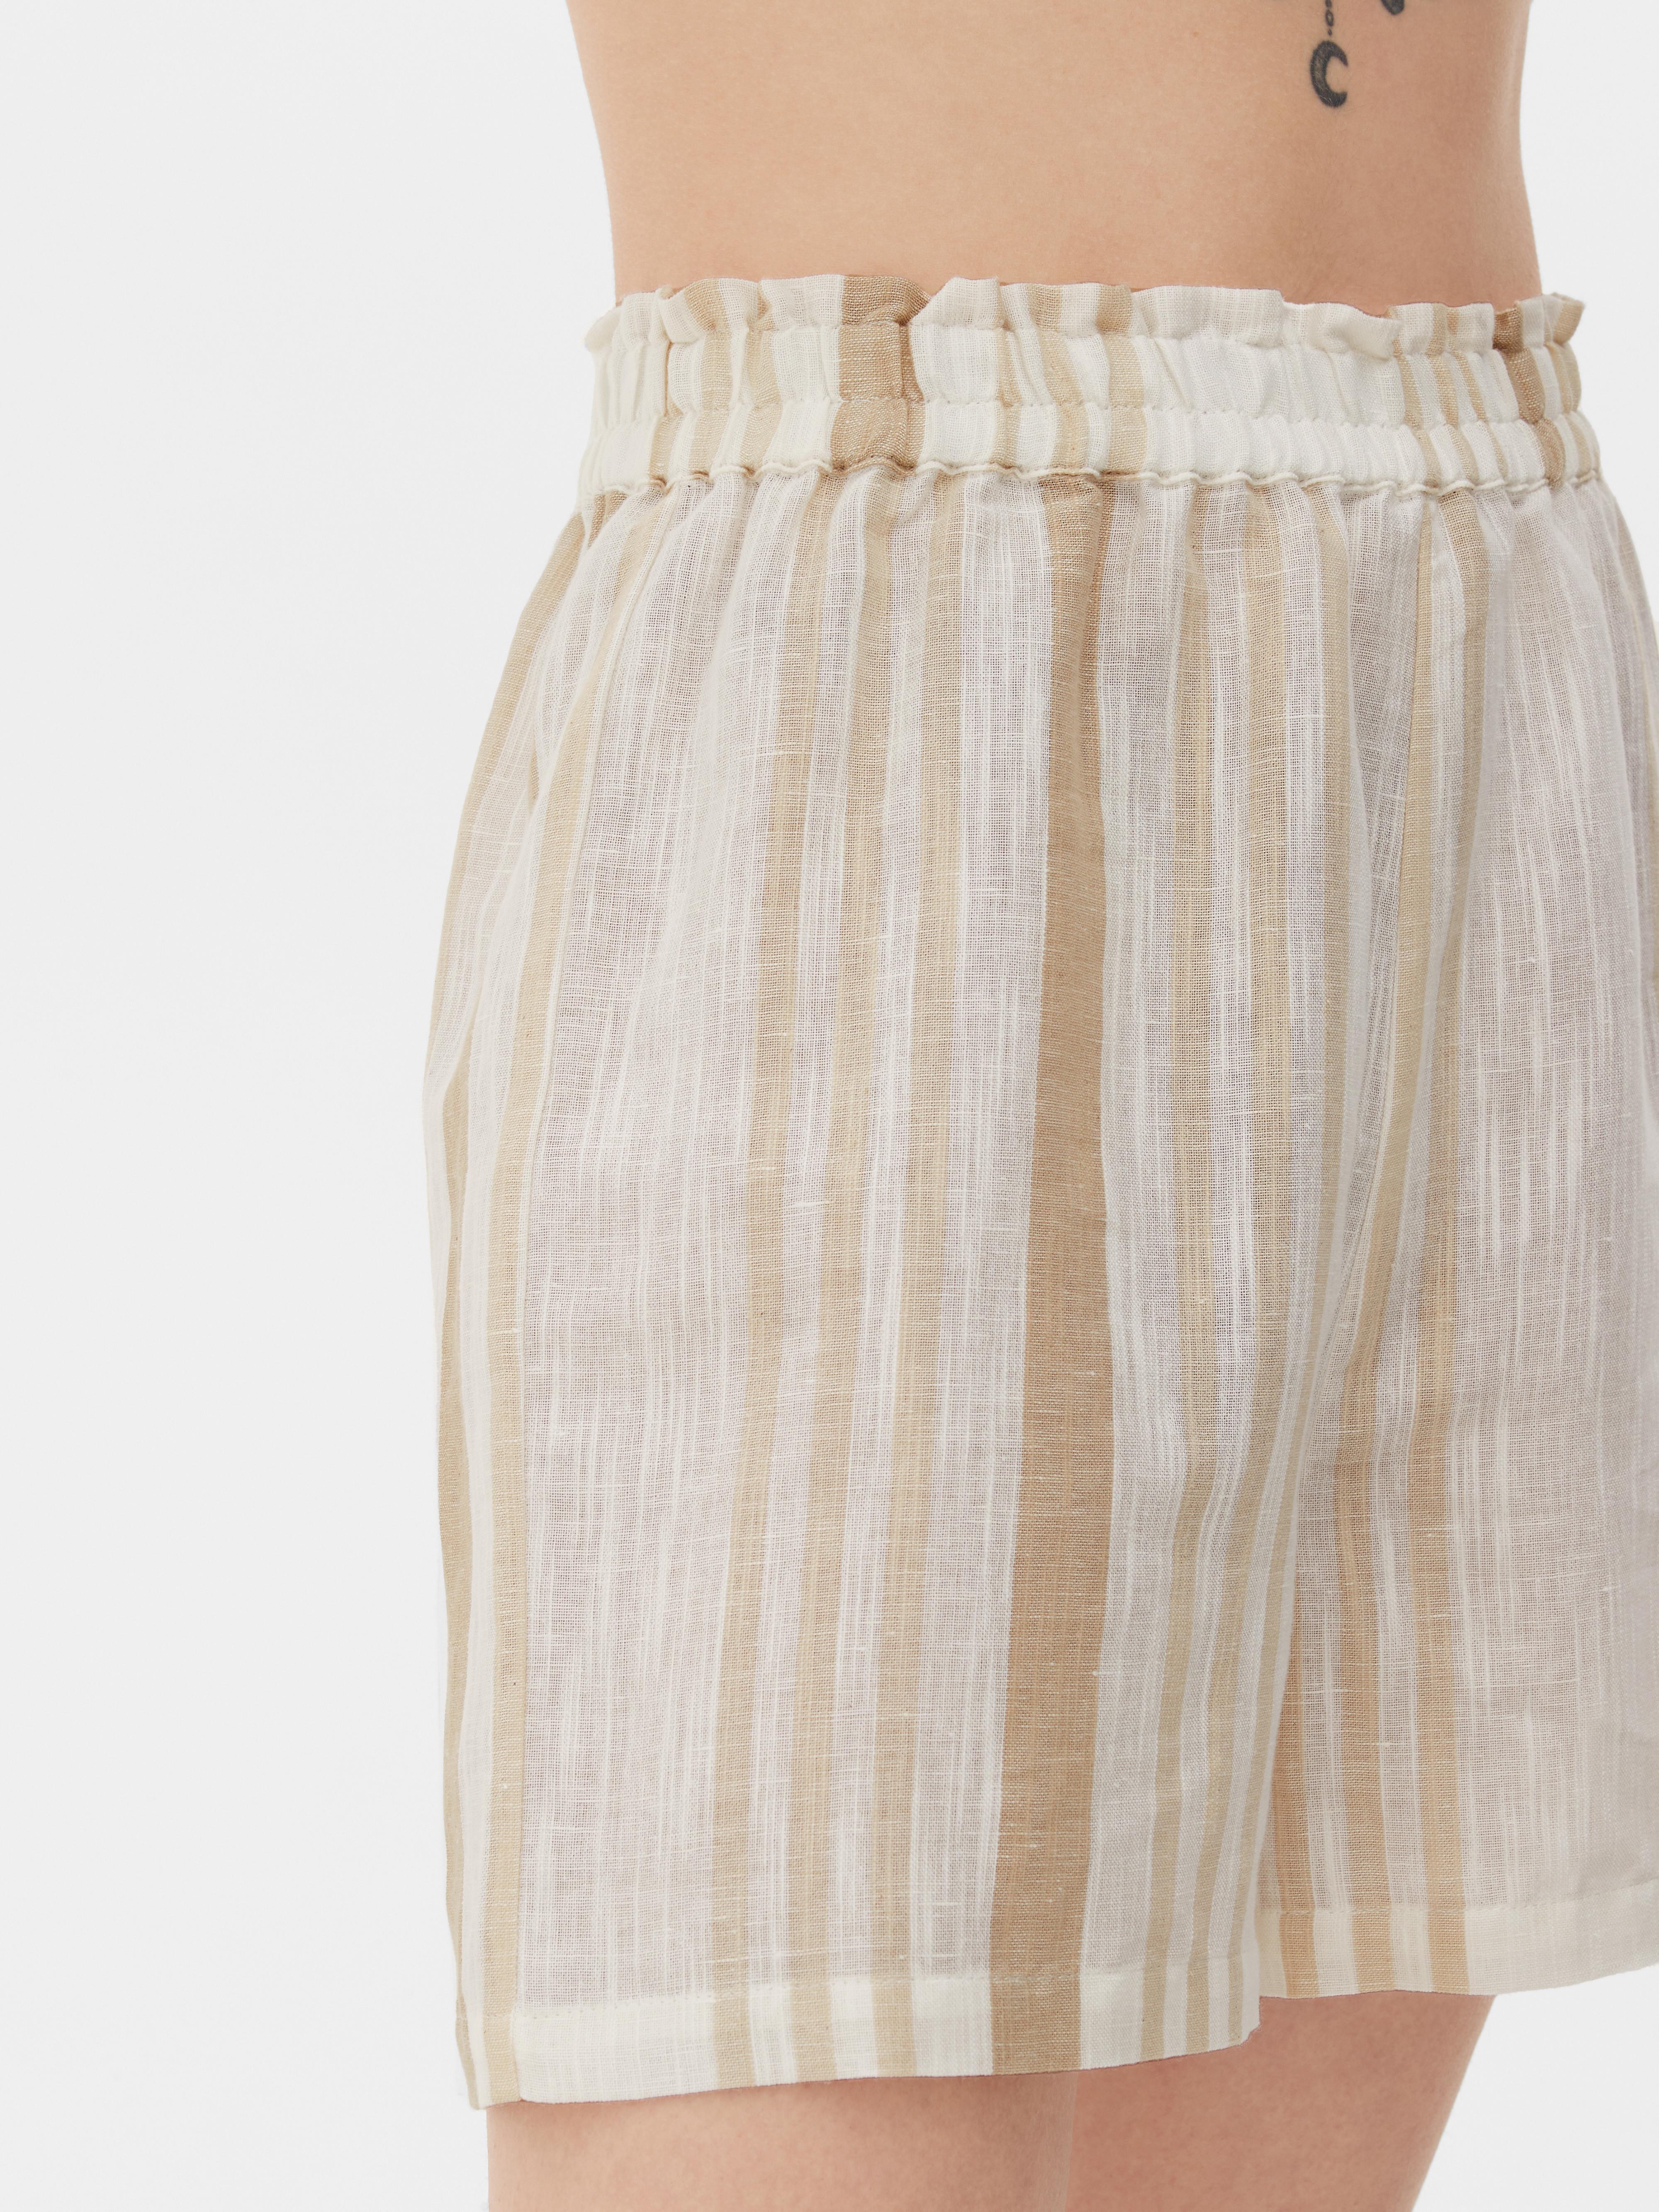 Cotton Linen Striped Shorts